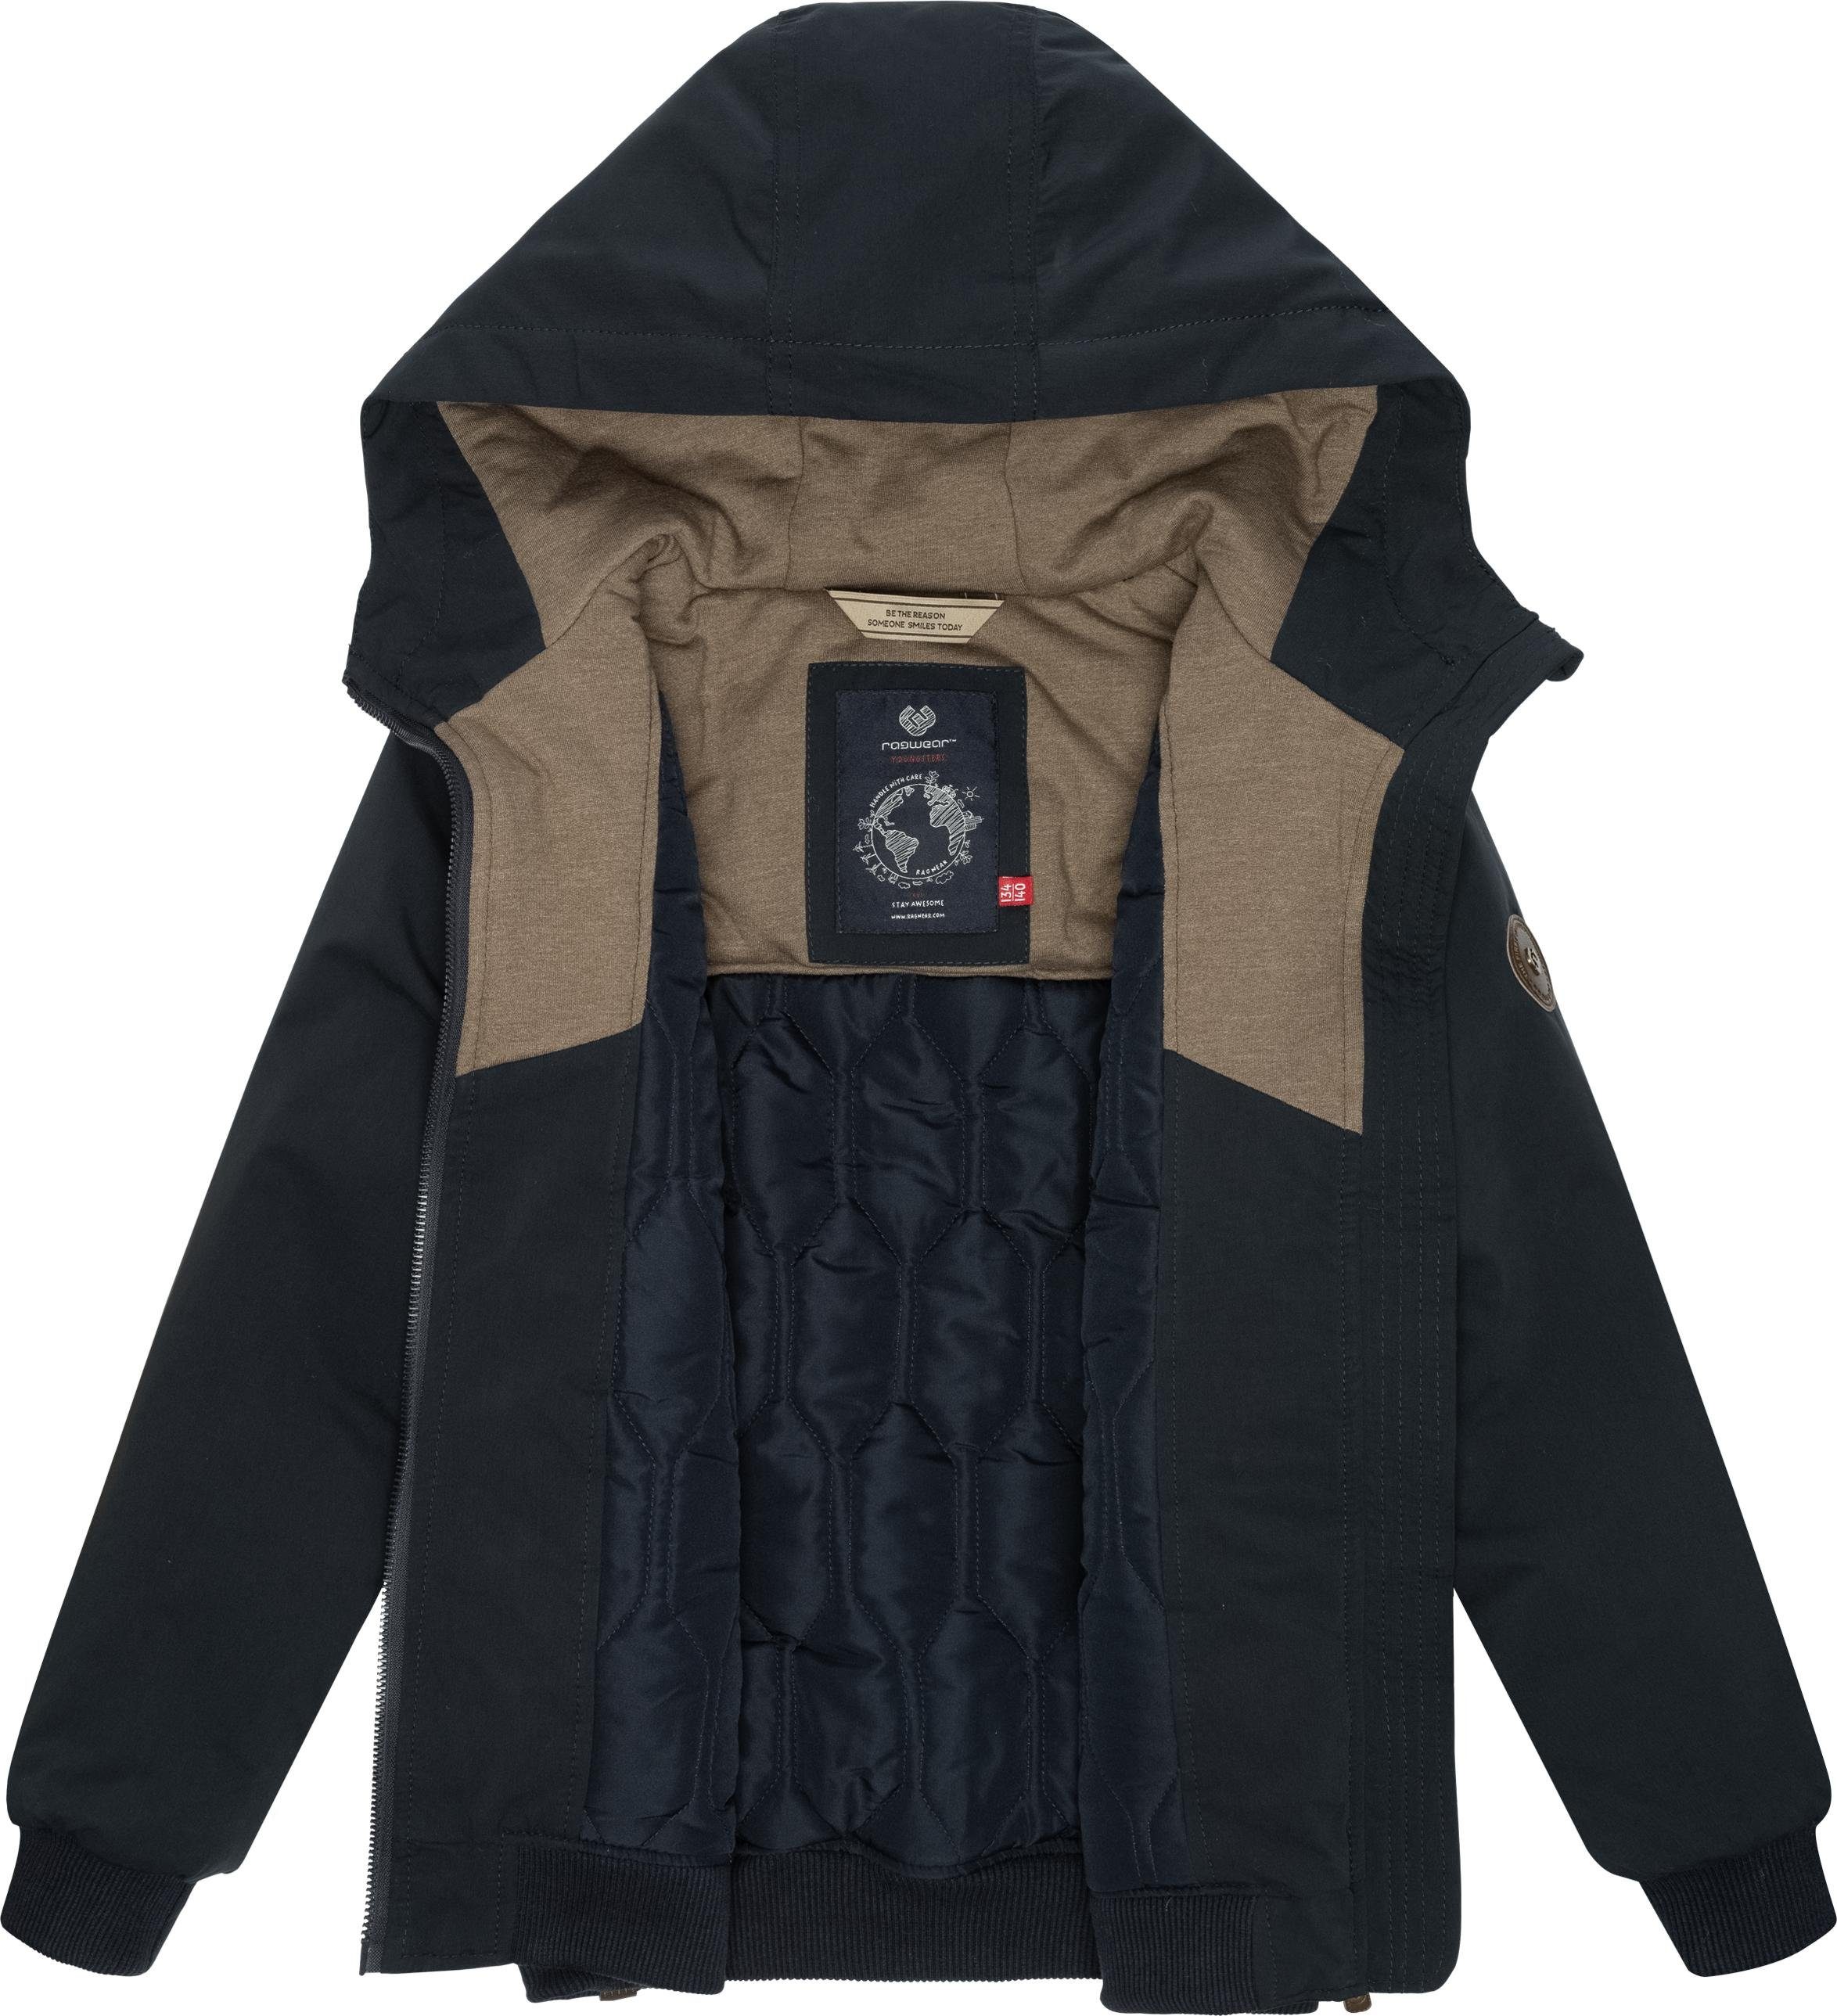 Ragwear Winterjacke Winter-Outdoorjacke schwarz Kapuze mit Maddew sportliche